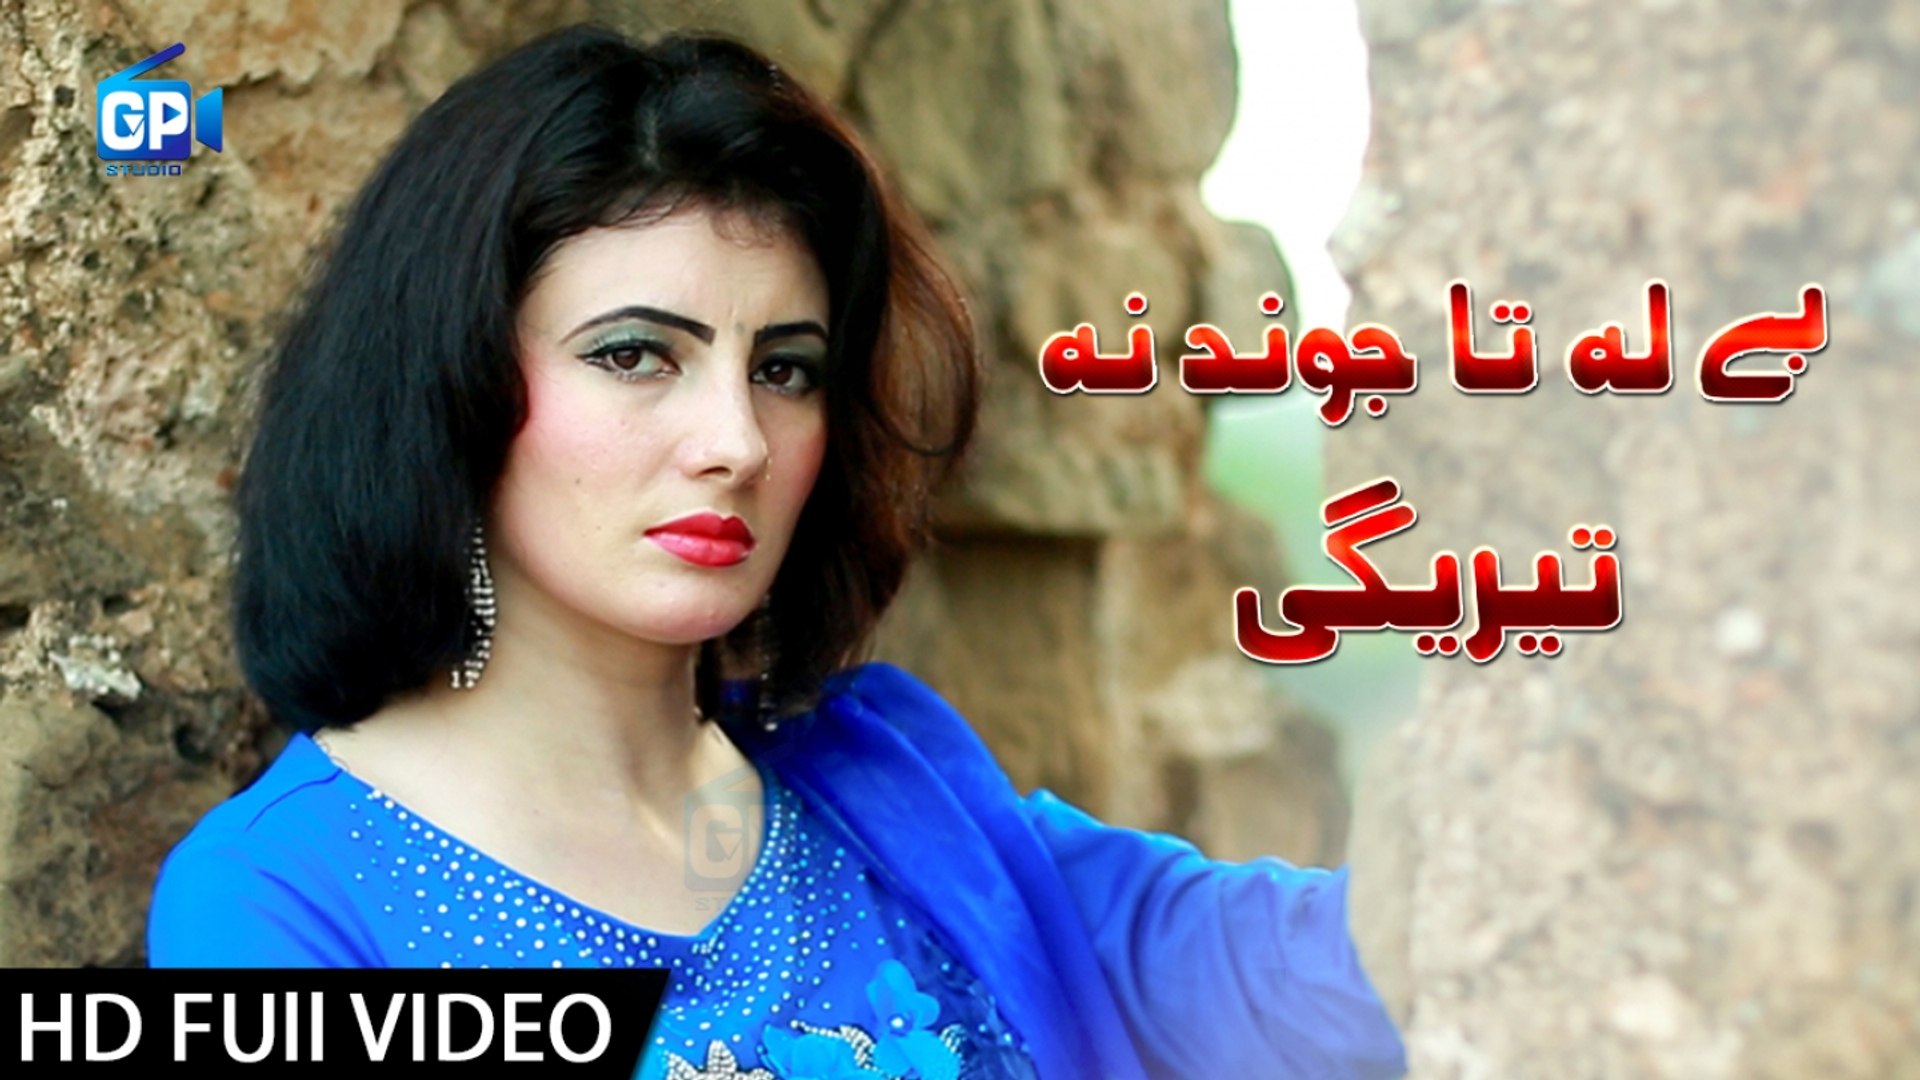 Nazia Iqbal Pashto New Songs 2018 | Be La Ta Jwand - latest songs Pashto song hd best music videos